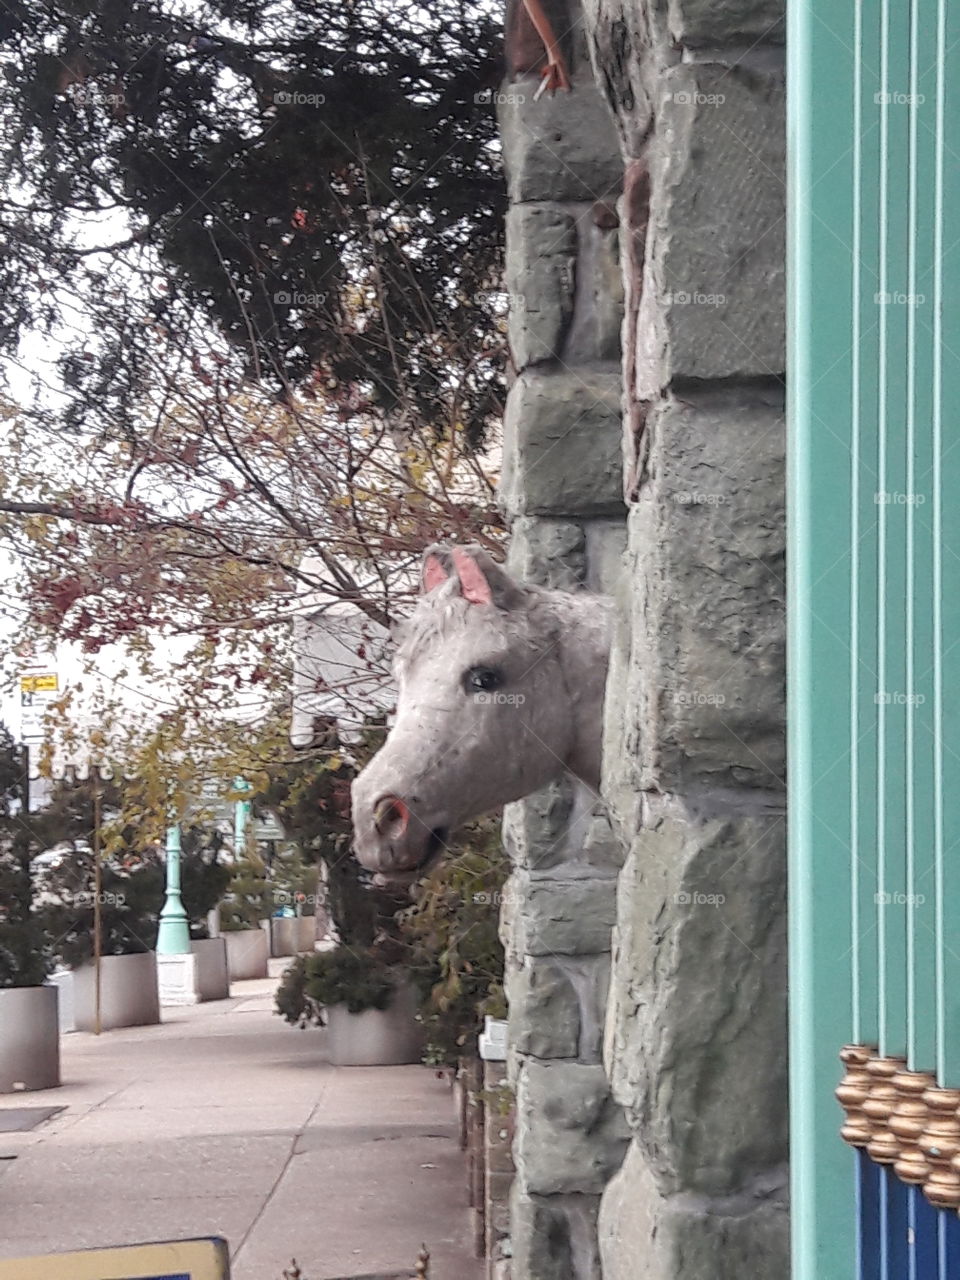 creepy horse statue...